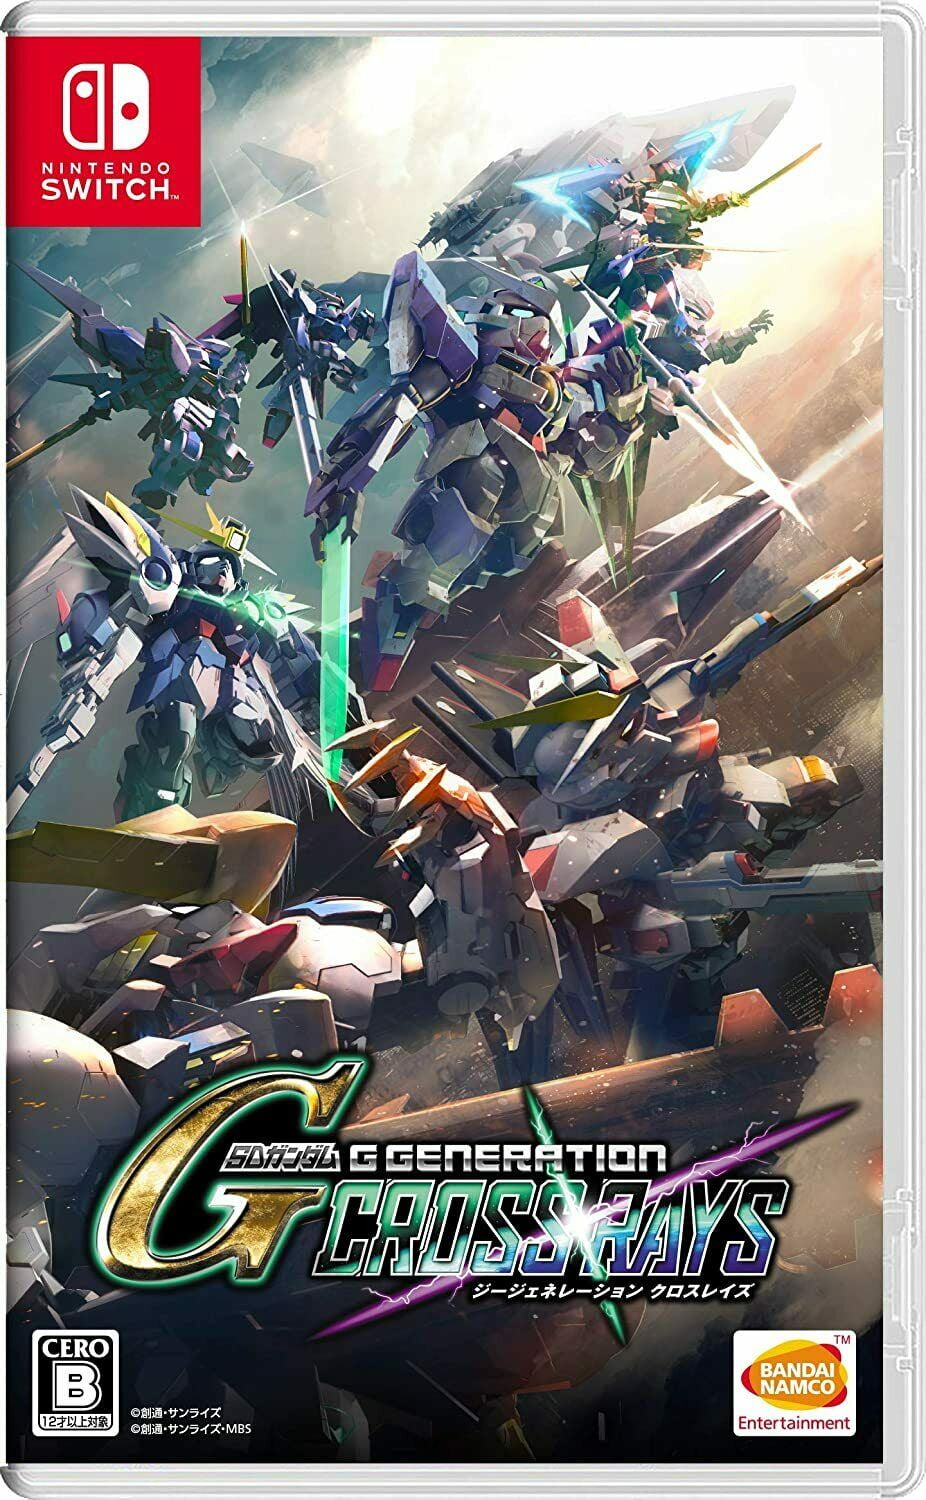 SD Gundam Force • Absolute Anime